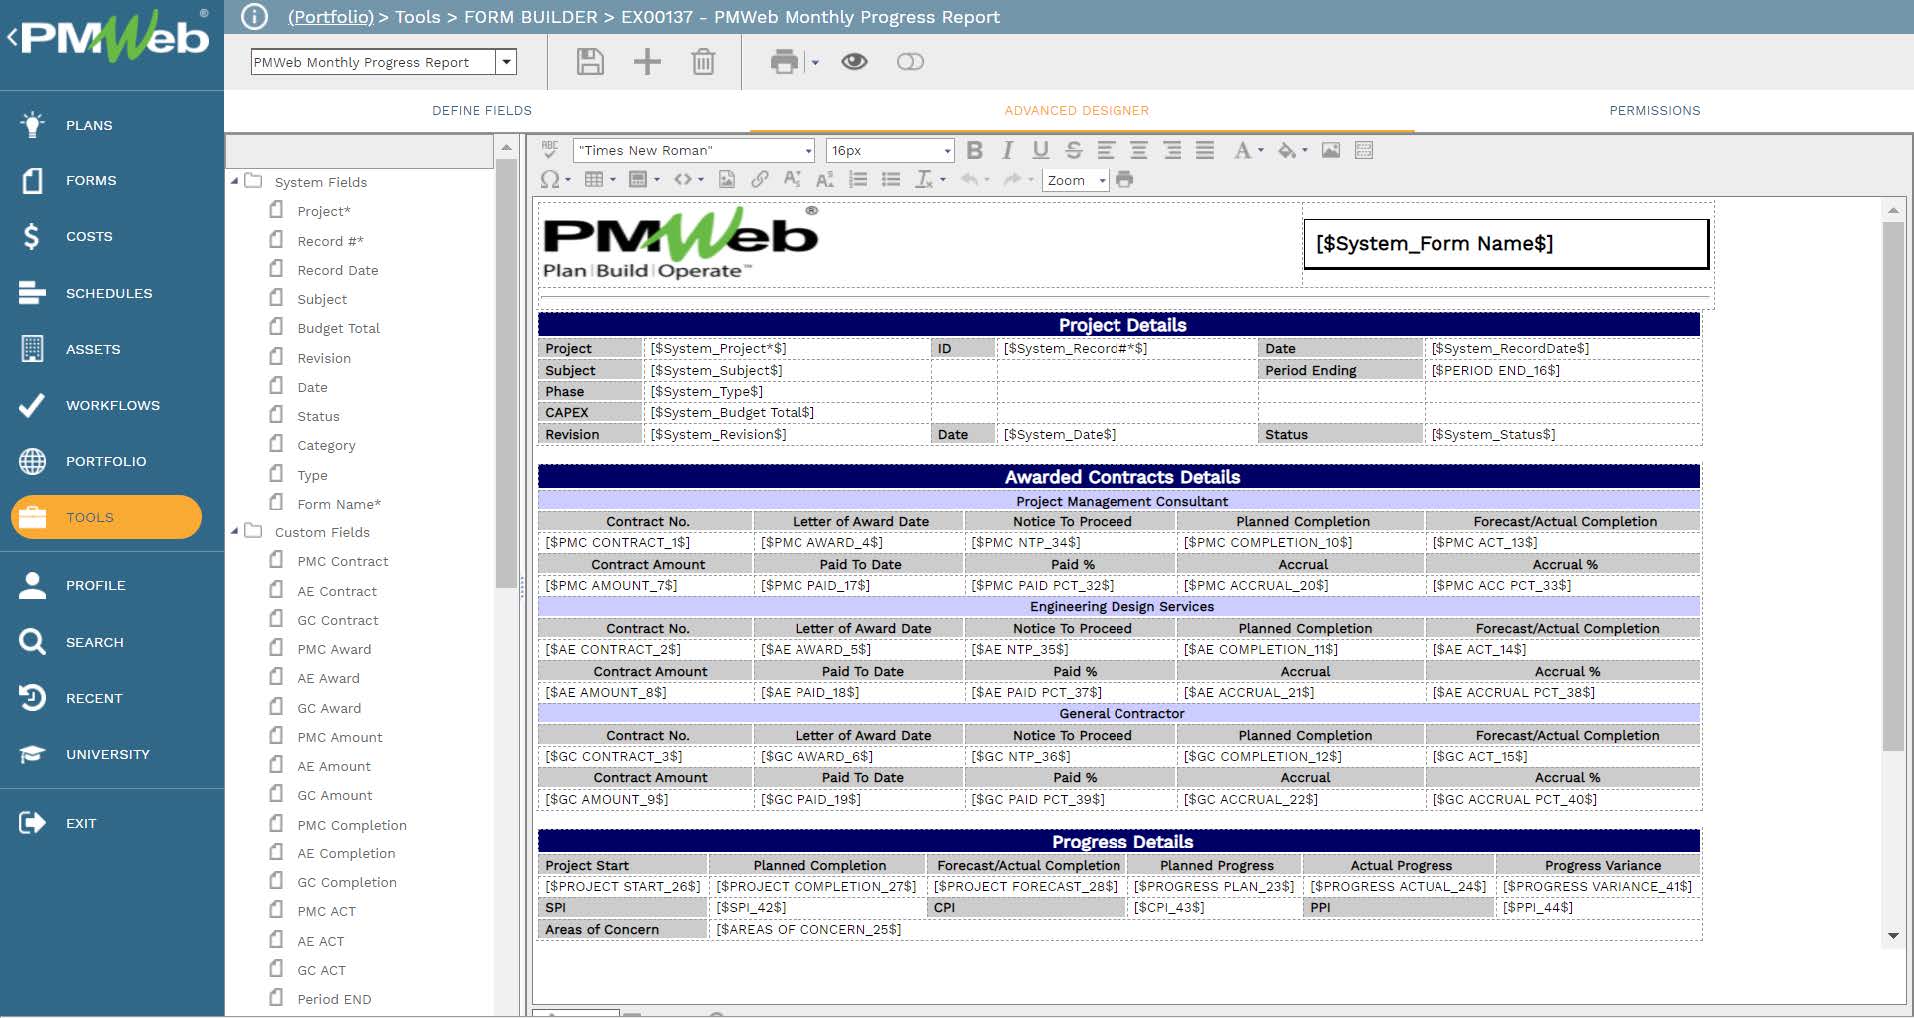 PMWeb 7 Tools Form Builder Pmweb Monthly Progress Report
Advance Designer 